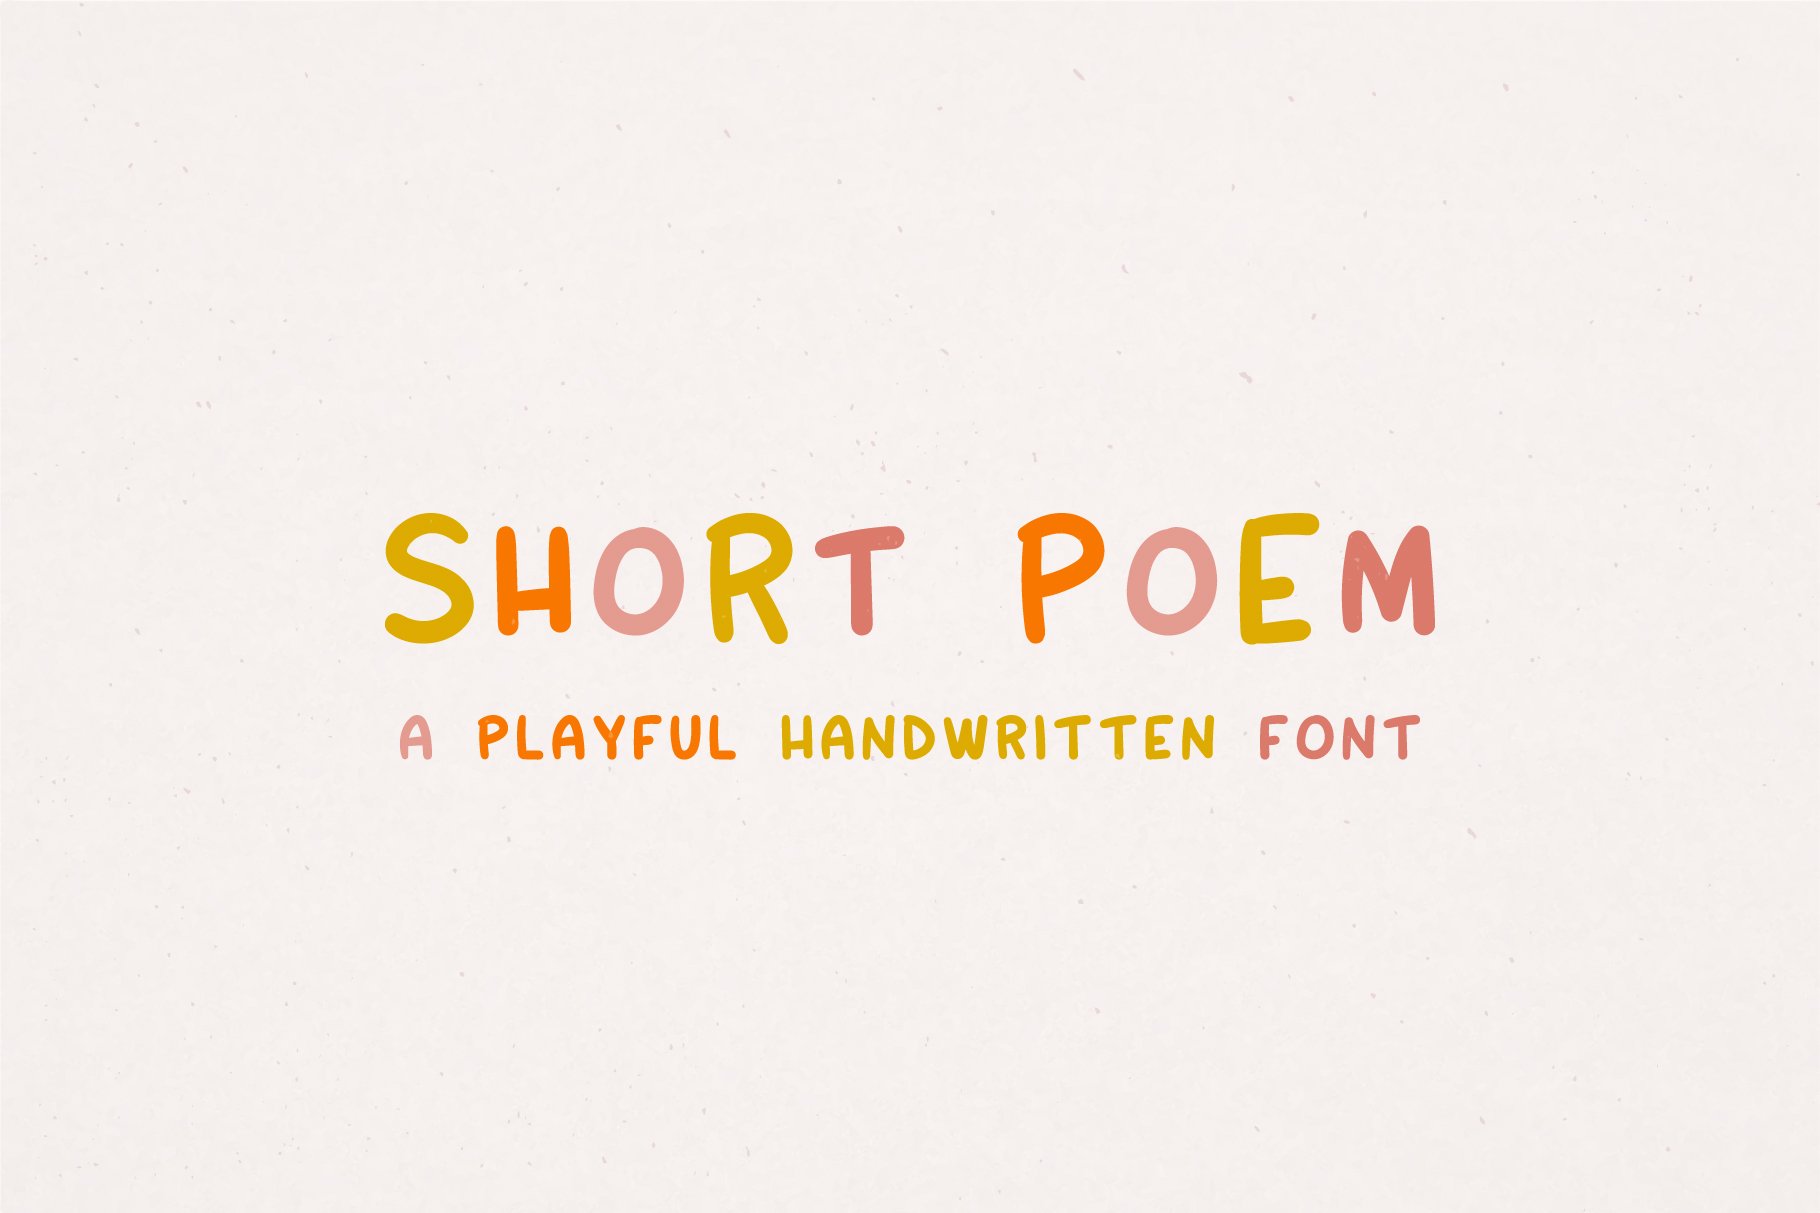 Short Poem - Handwritten font cover image.